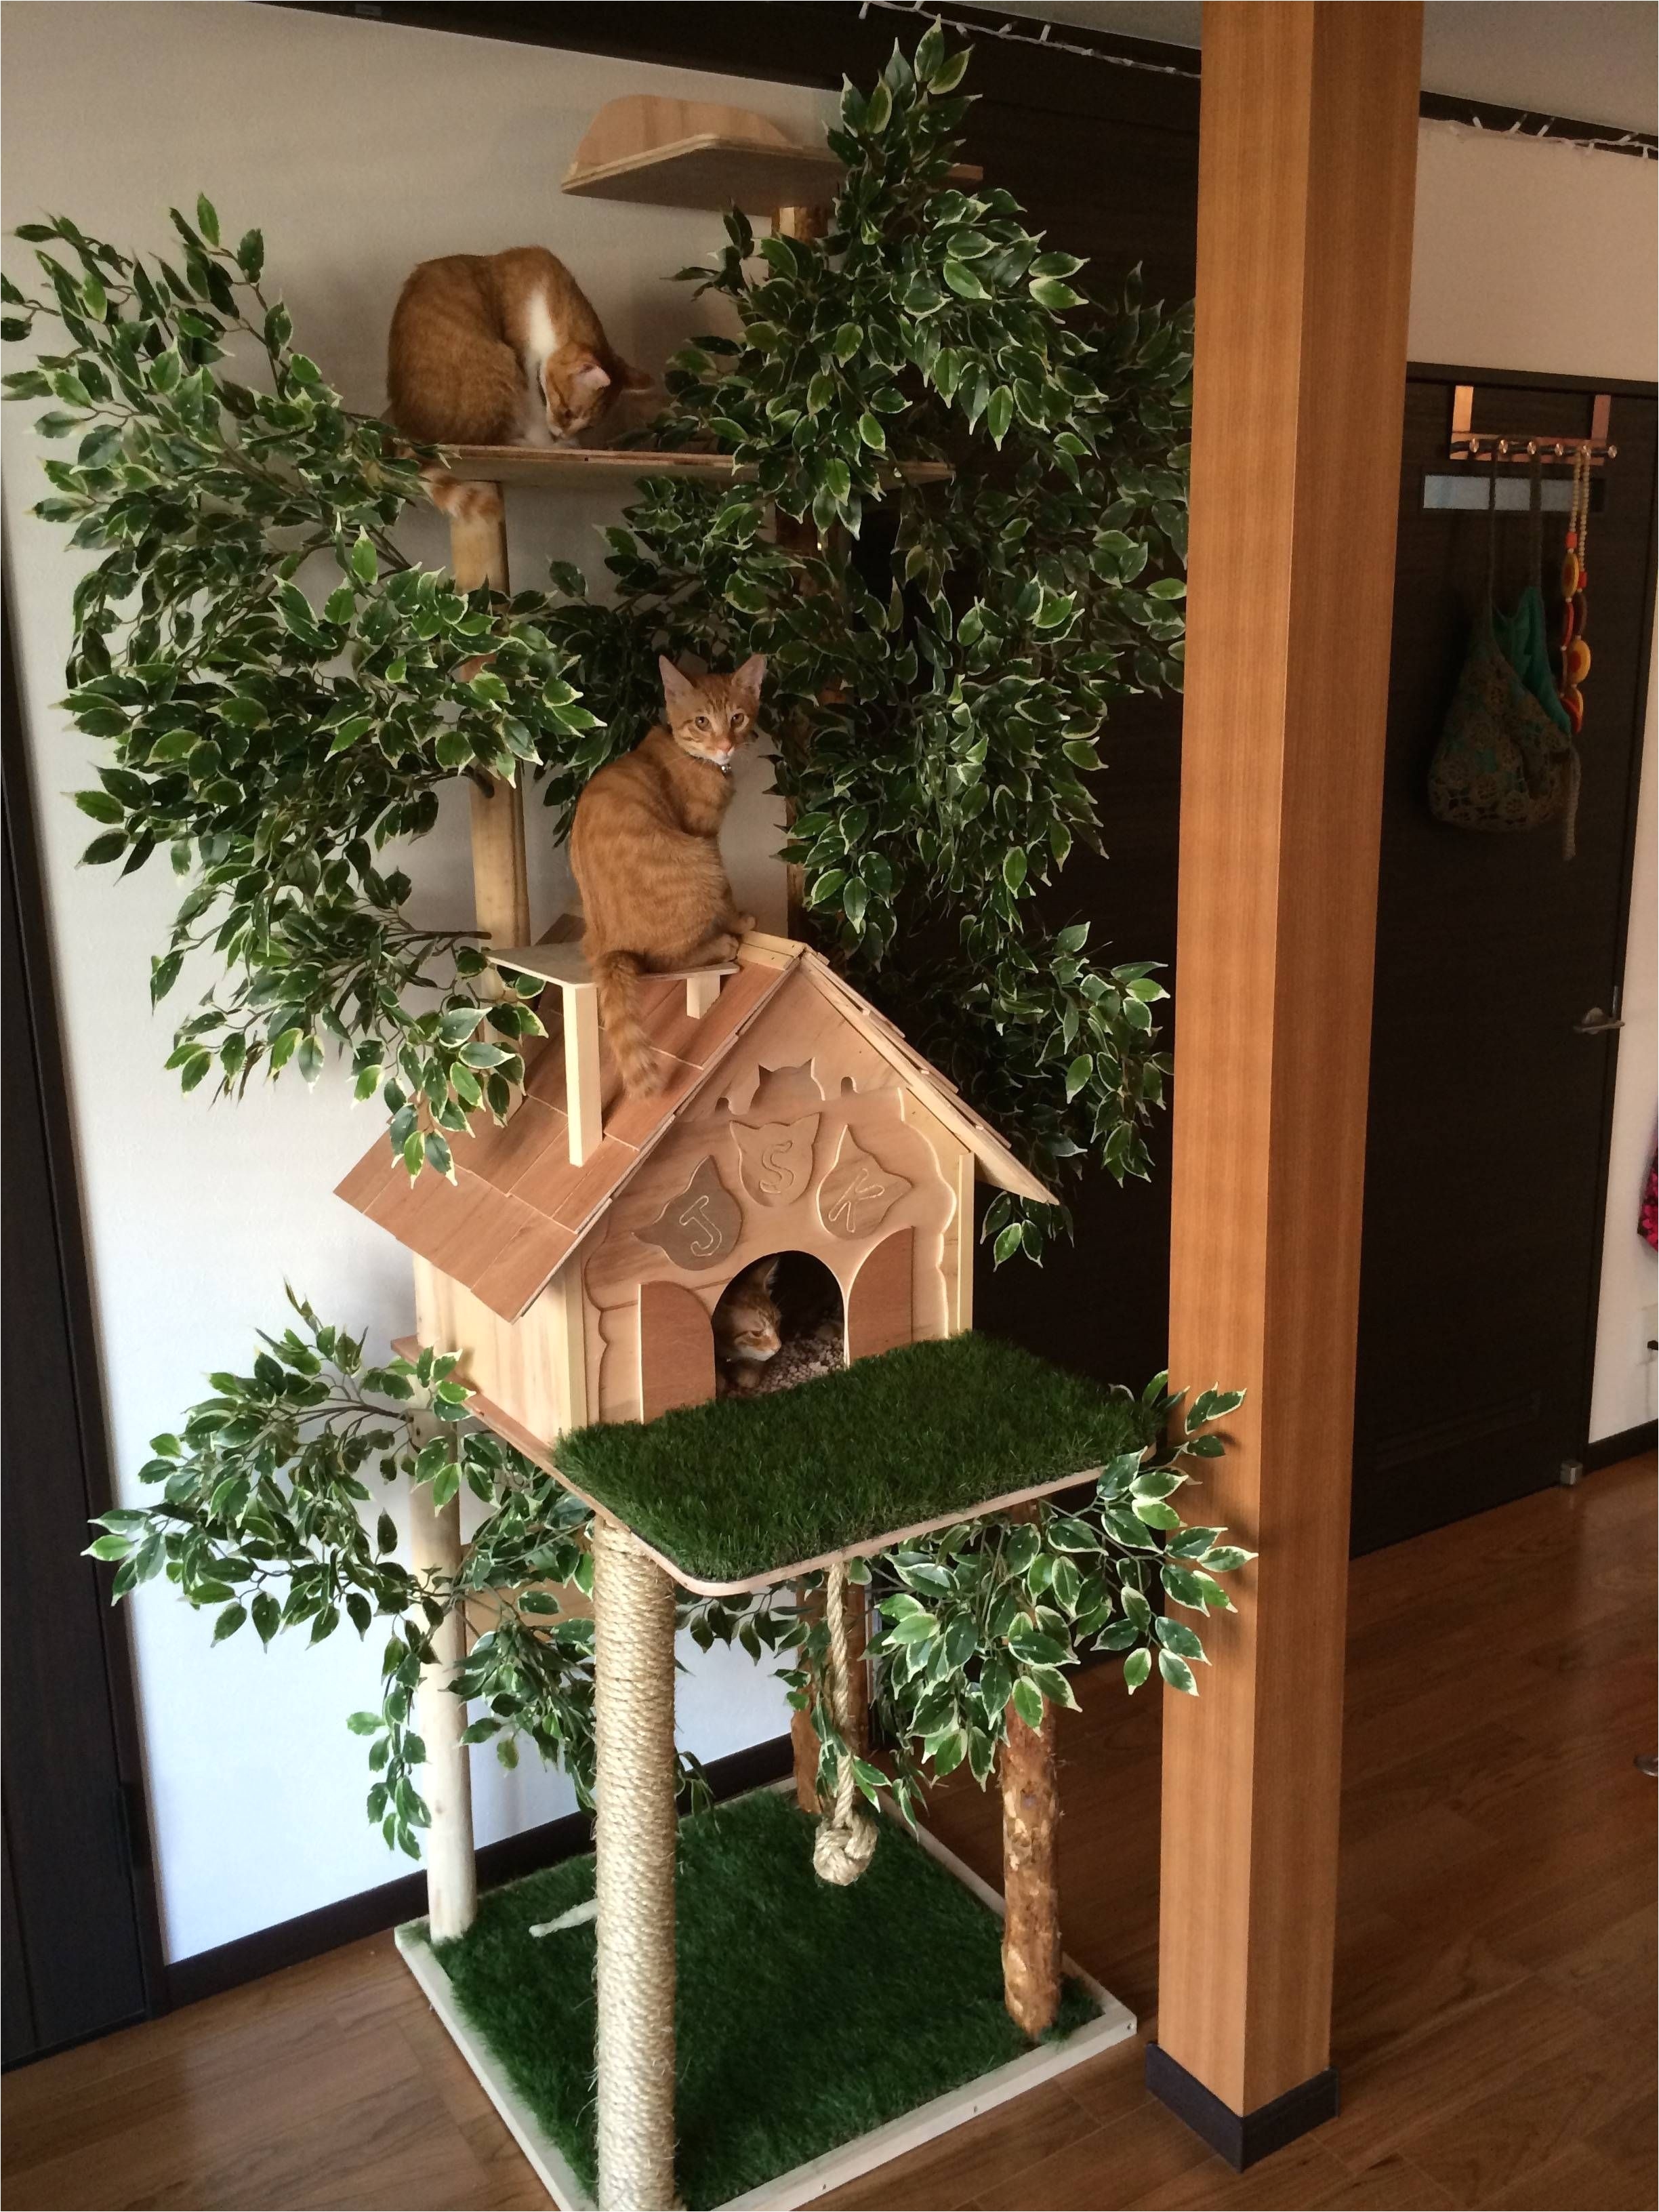 od about gebrichmond cat house plans cat house design diy luxury cat house plans custom house plans best